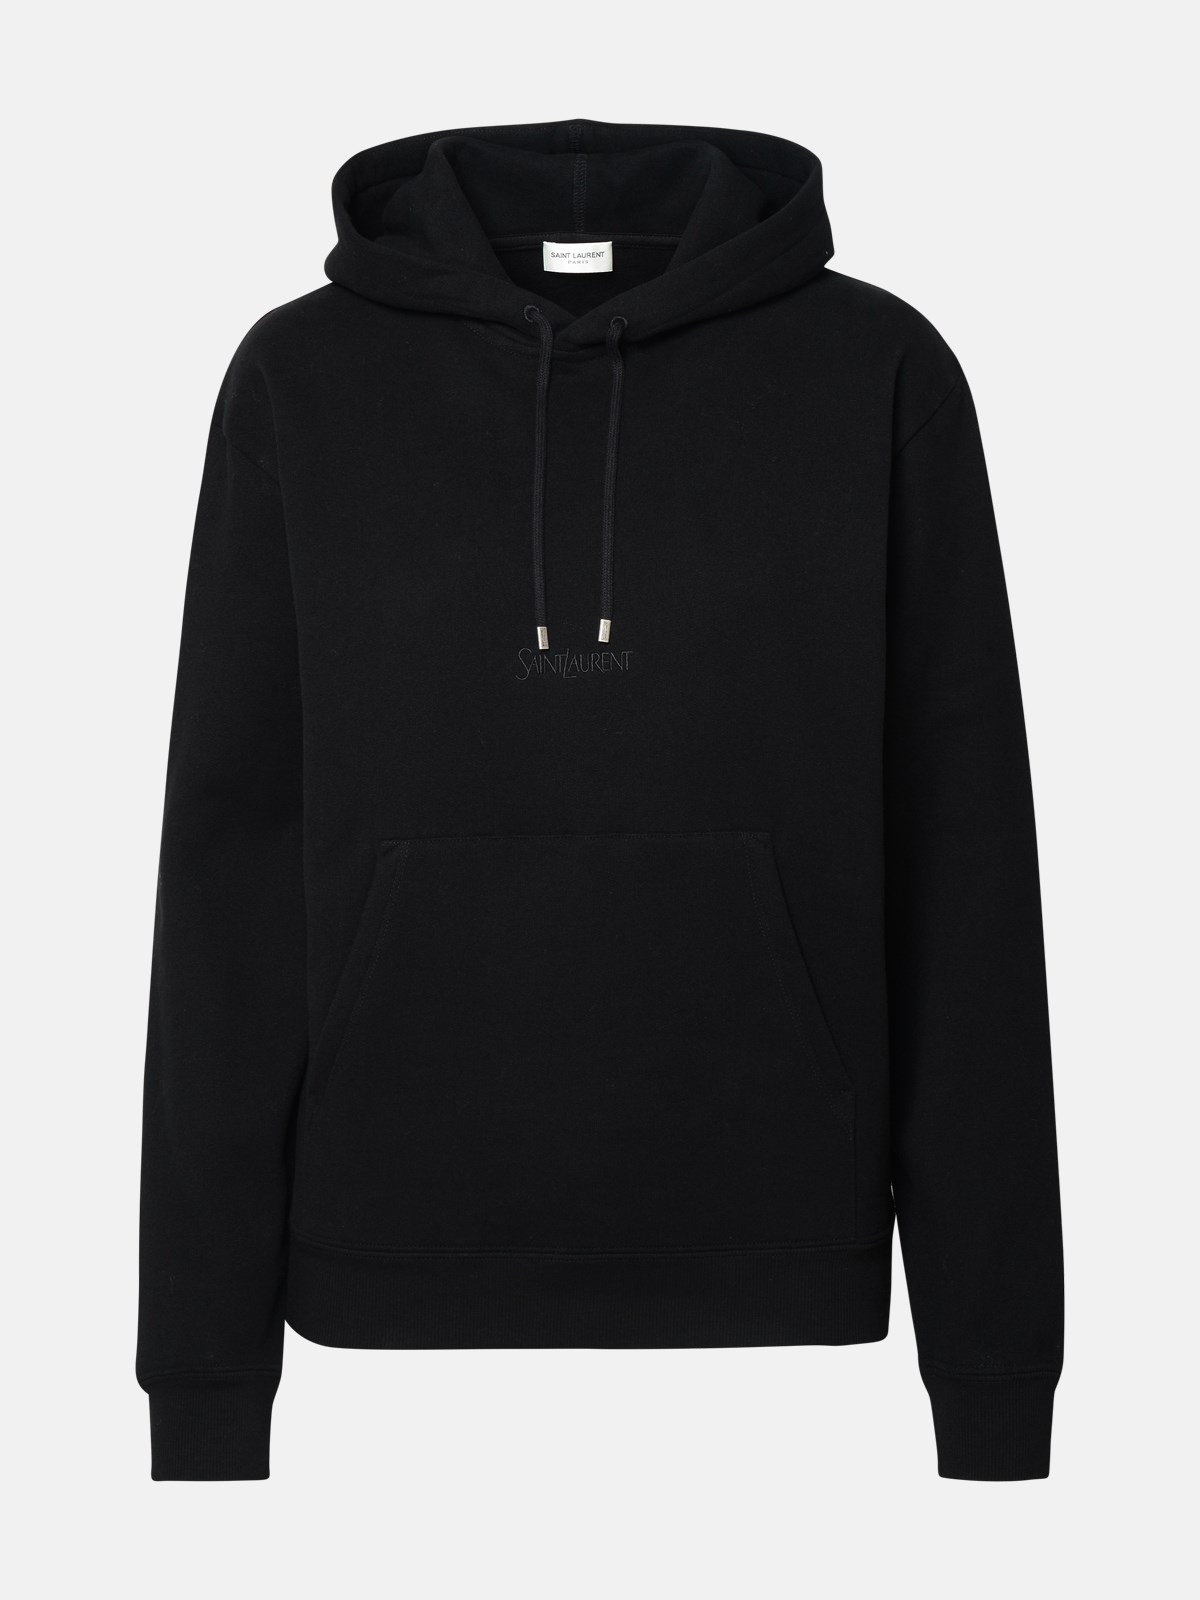 Saint Laurent Black Cotton Sweatshirt